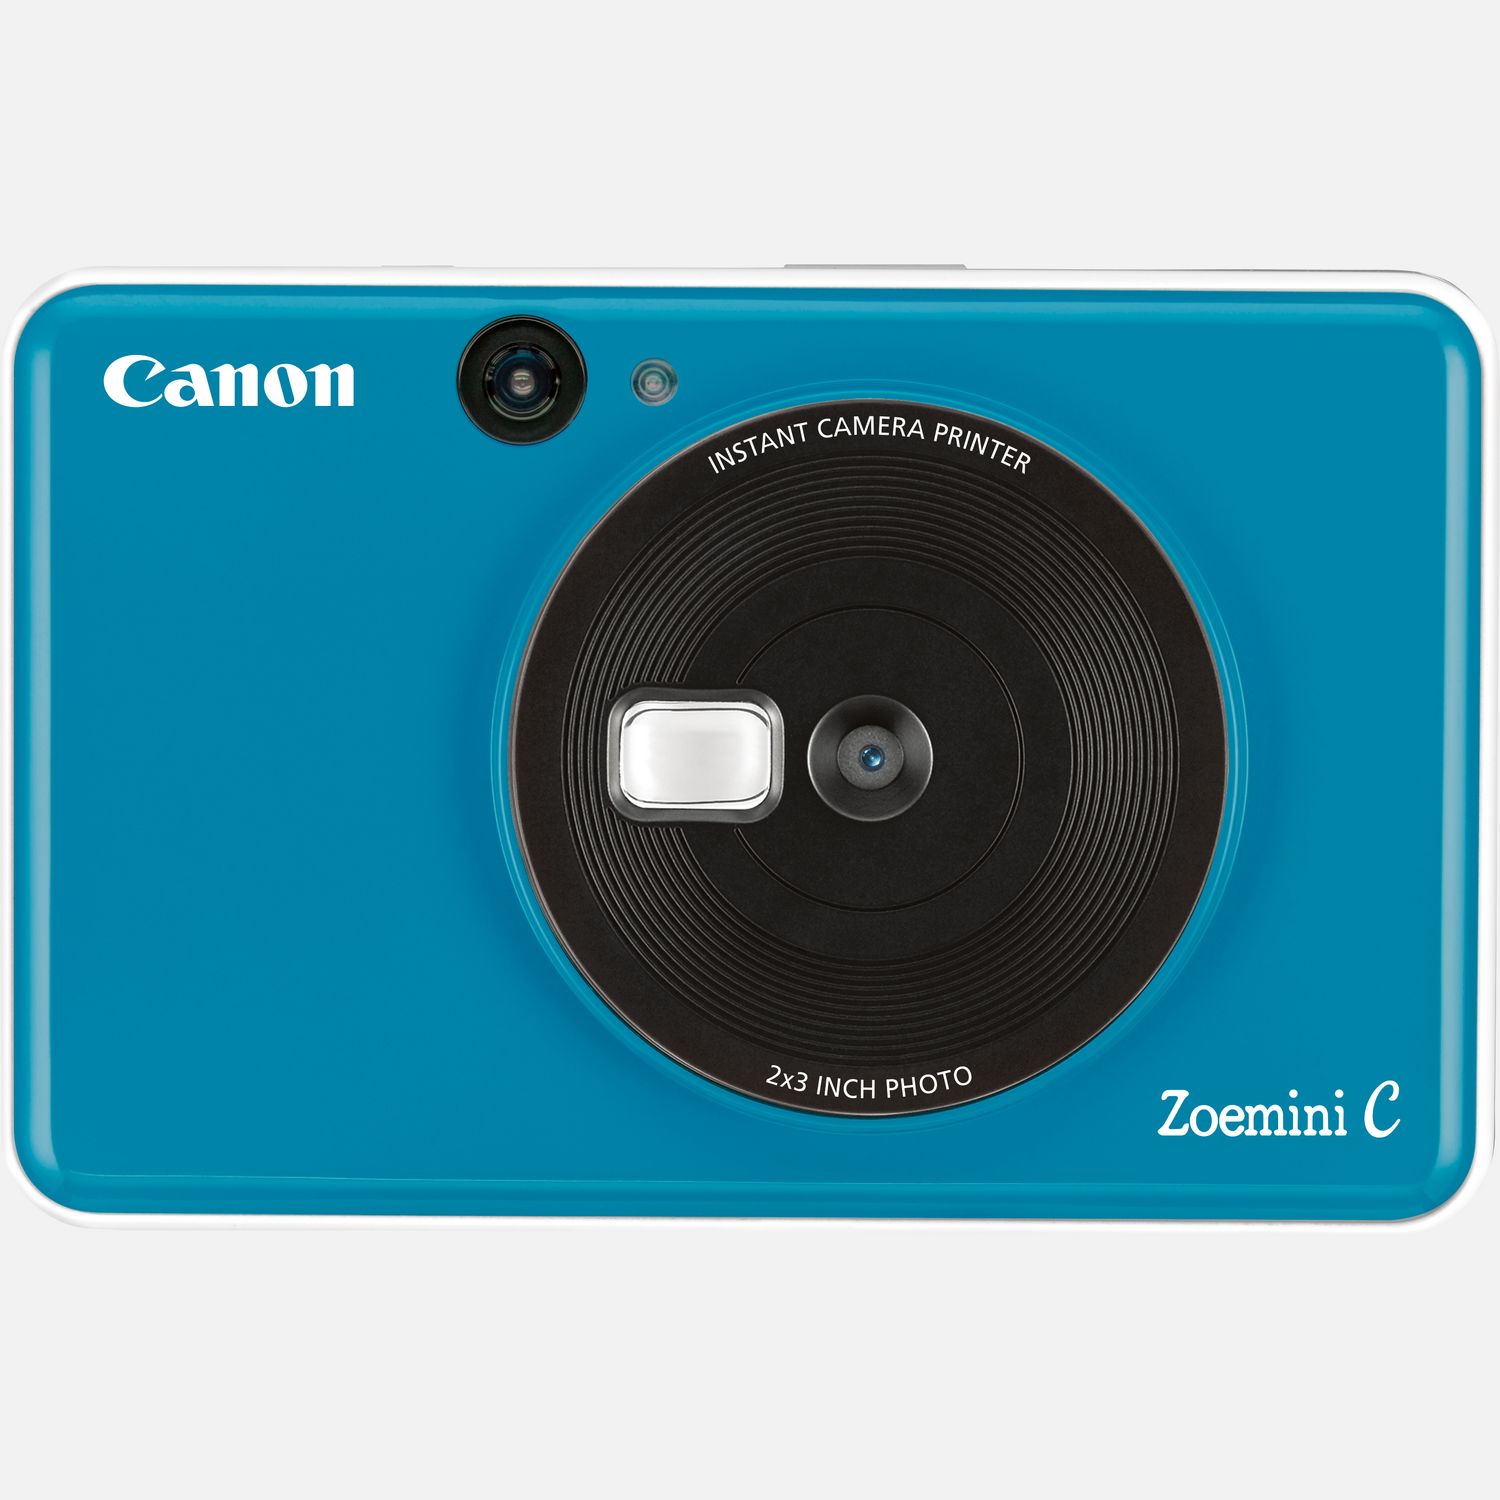 Image of Fotocamera istantanea Canon Zoemini C, Seaside blue